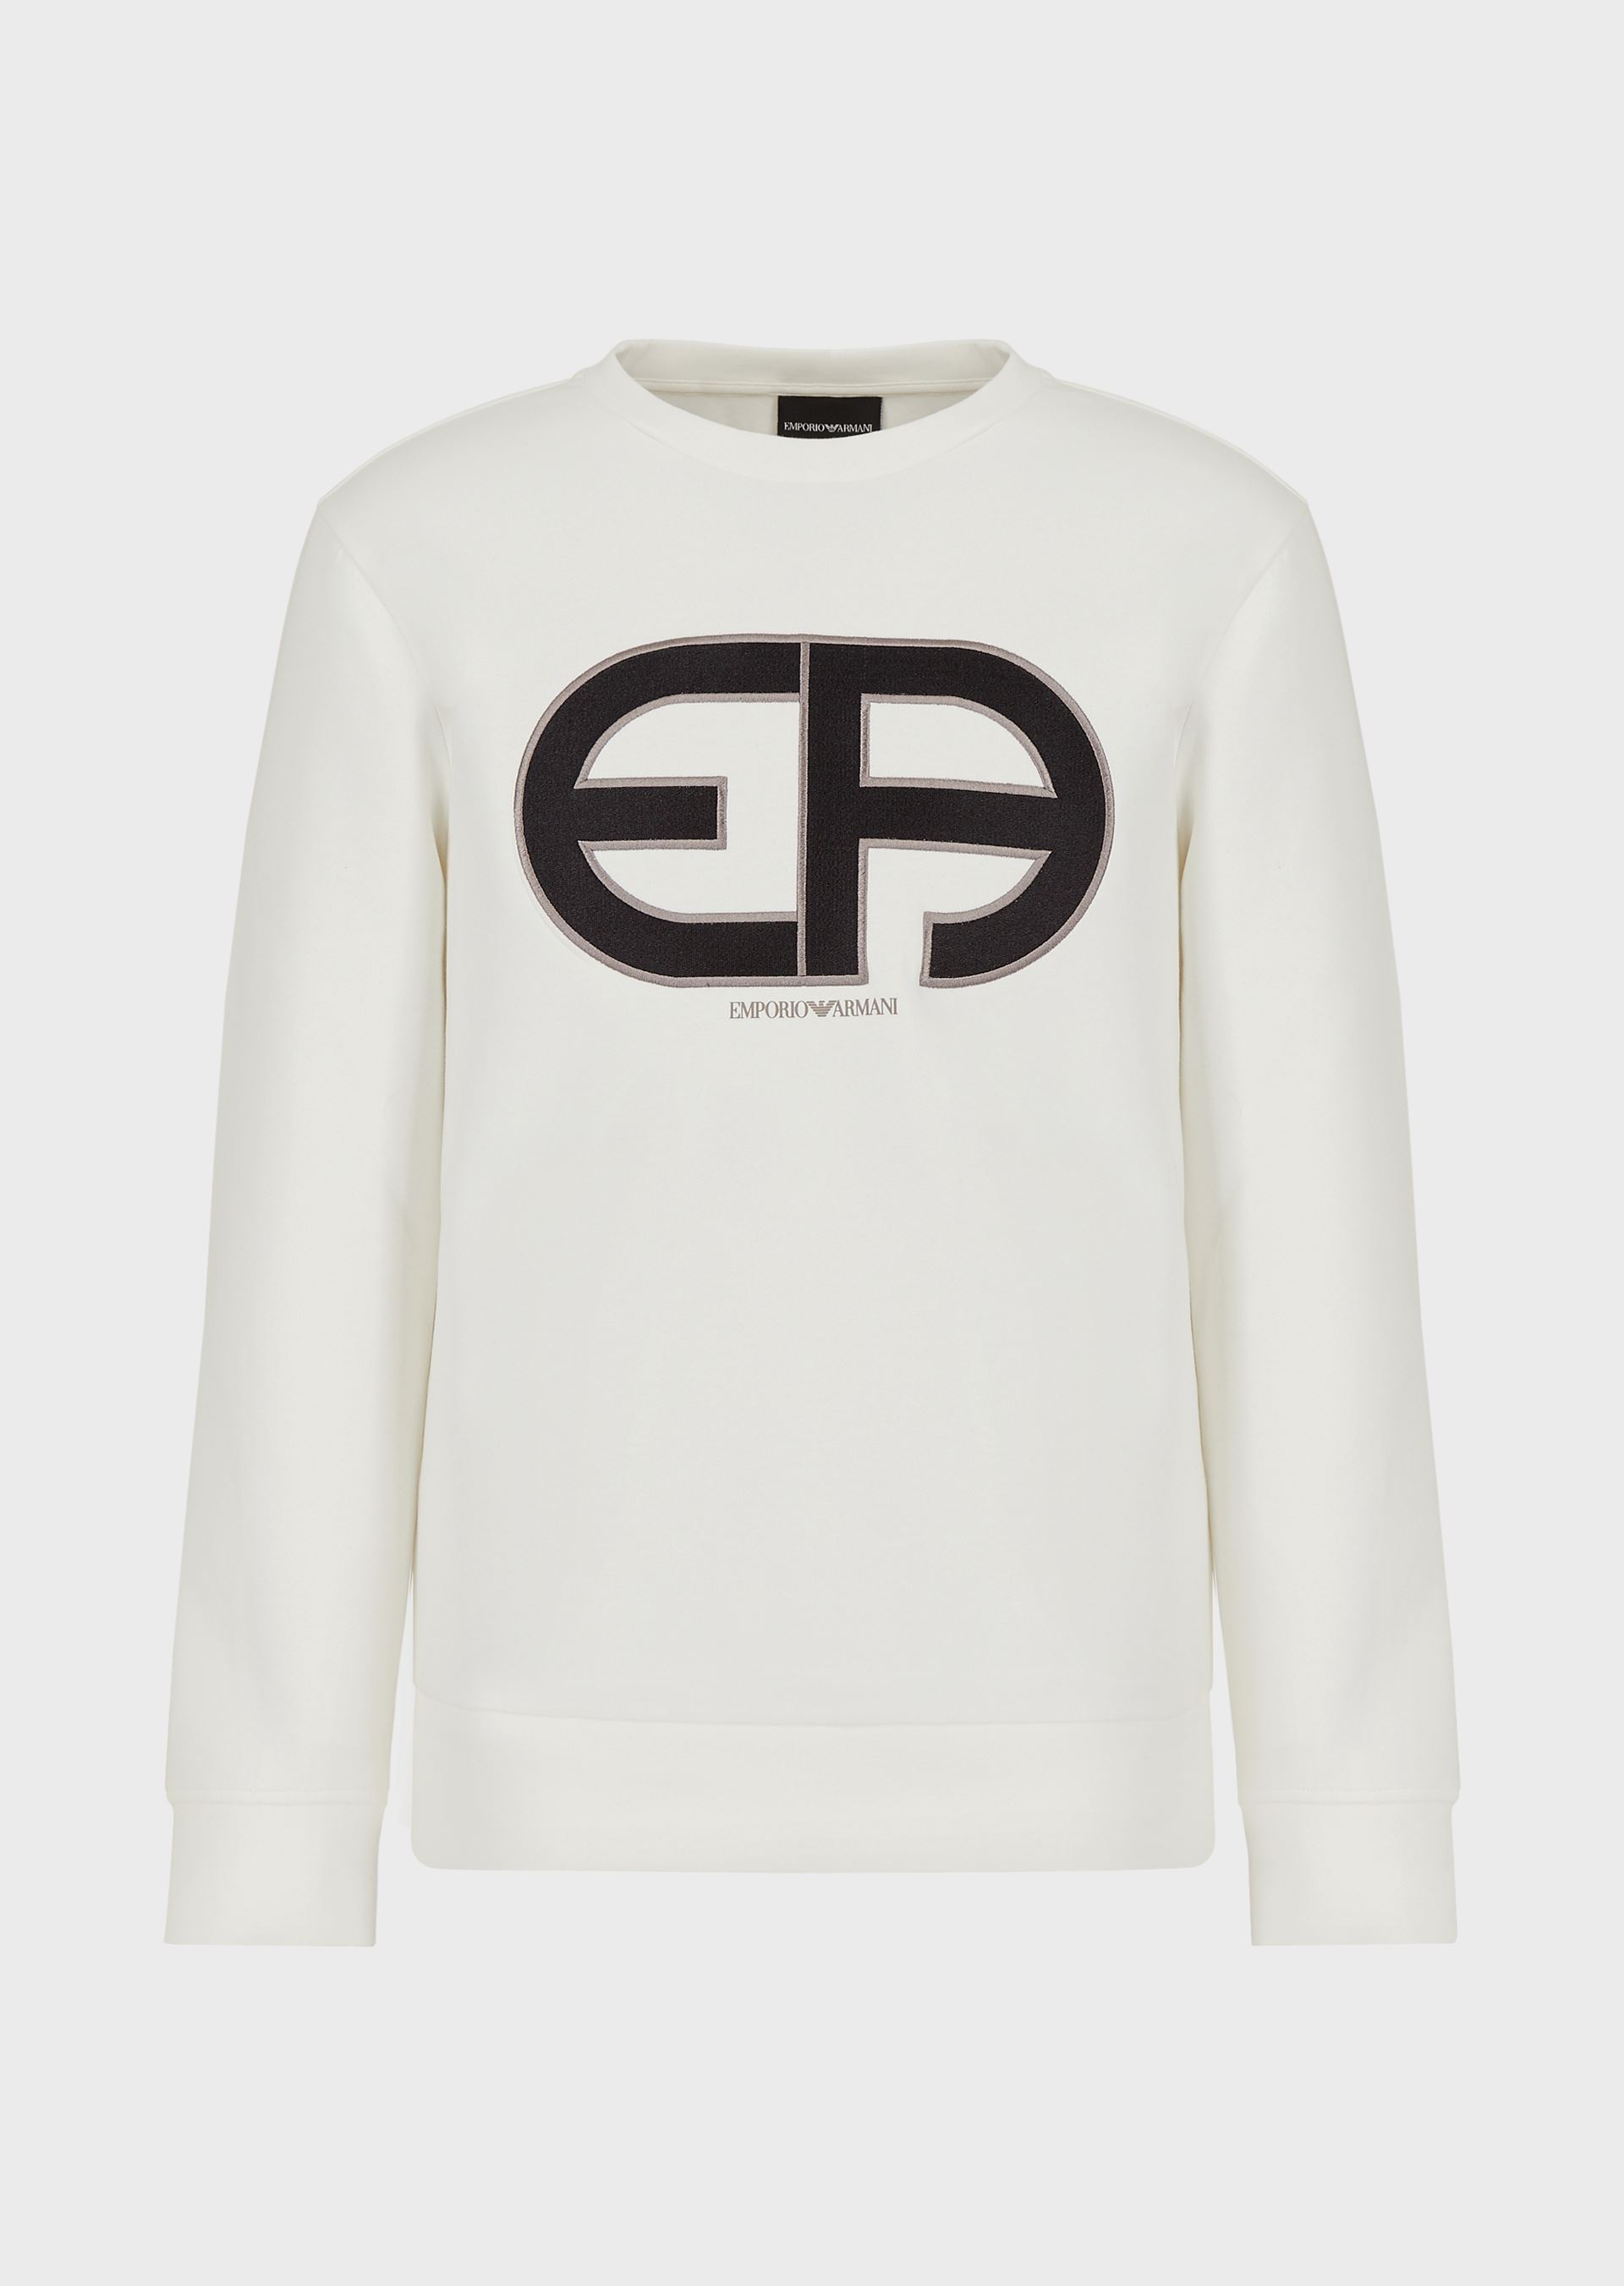 Emporio Armani Sweatshirts - Item 12564913 In Milky White